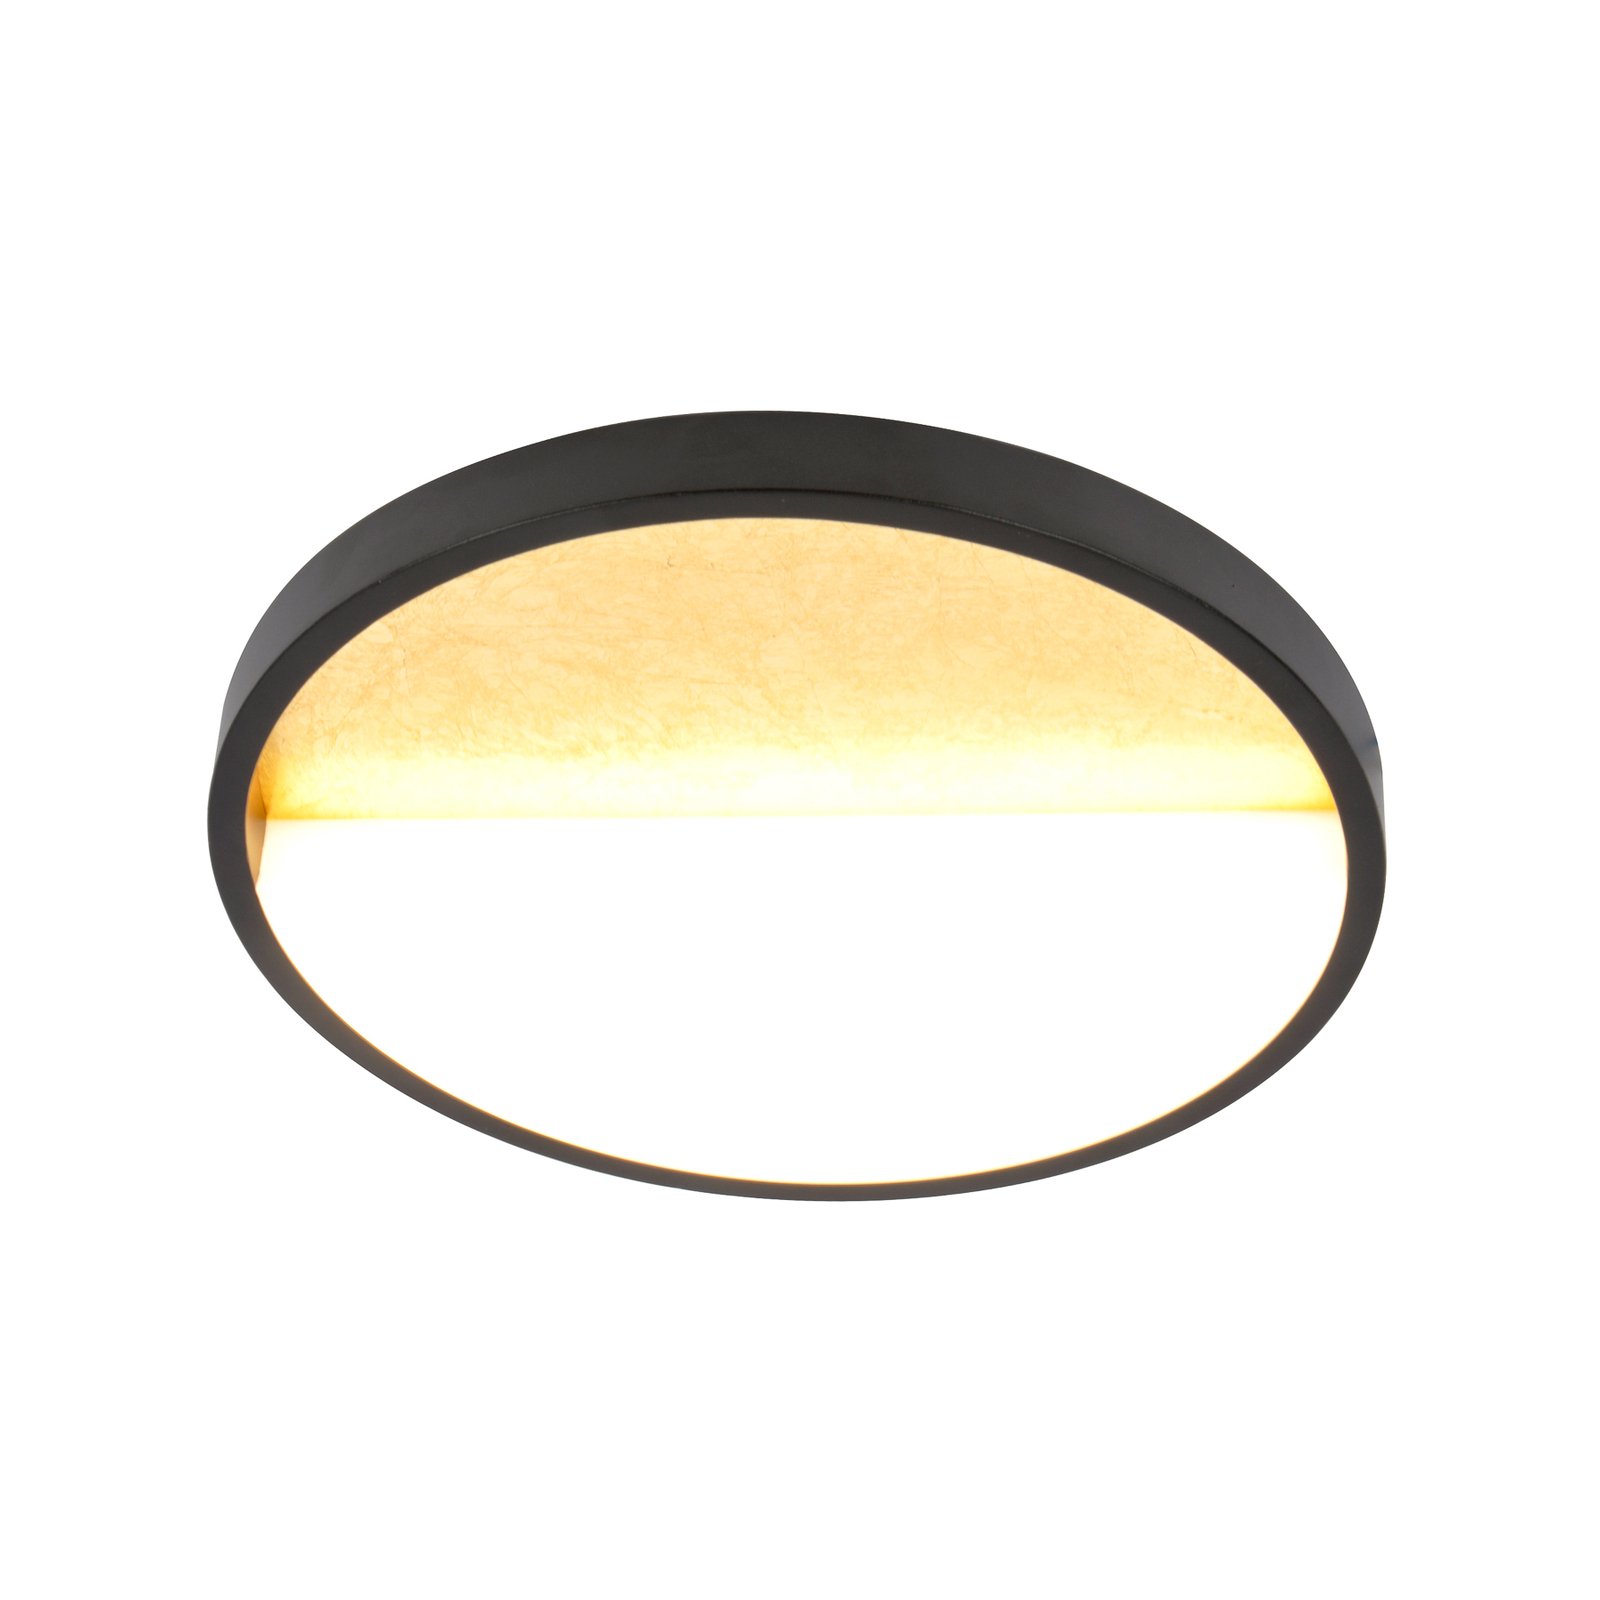 LED-Wandleuchte Vista, gold/schwarz, Ø 30 cm